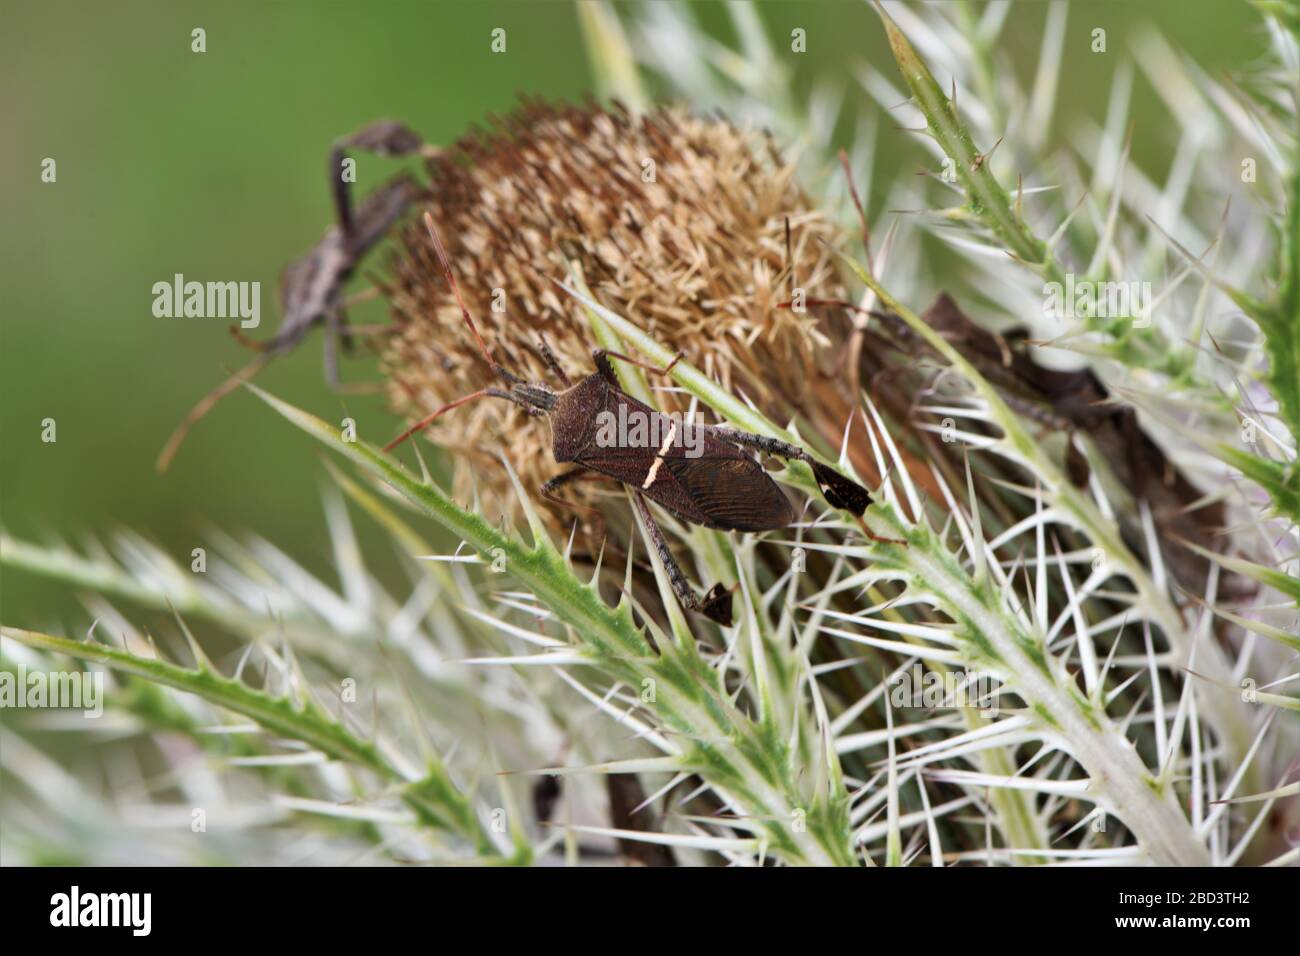 Eastern foglia footed bug. Foto Stock